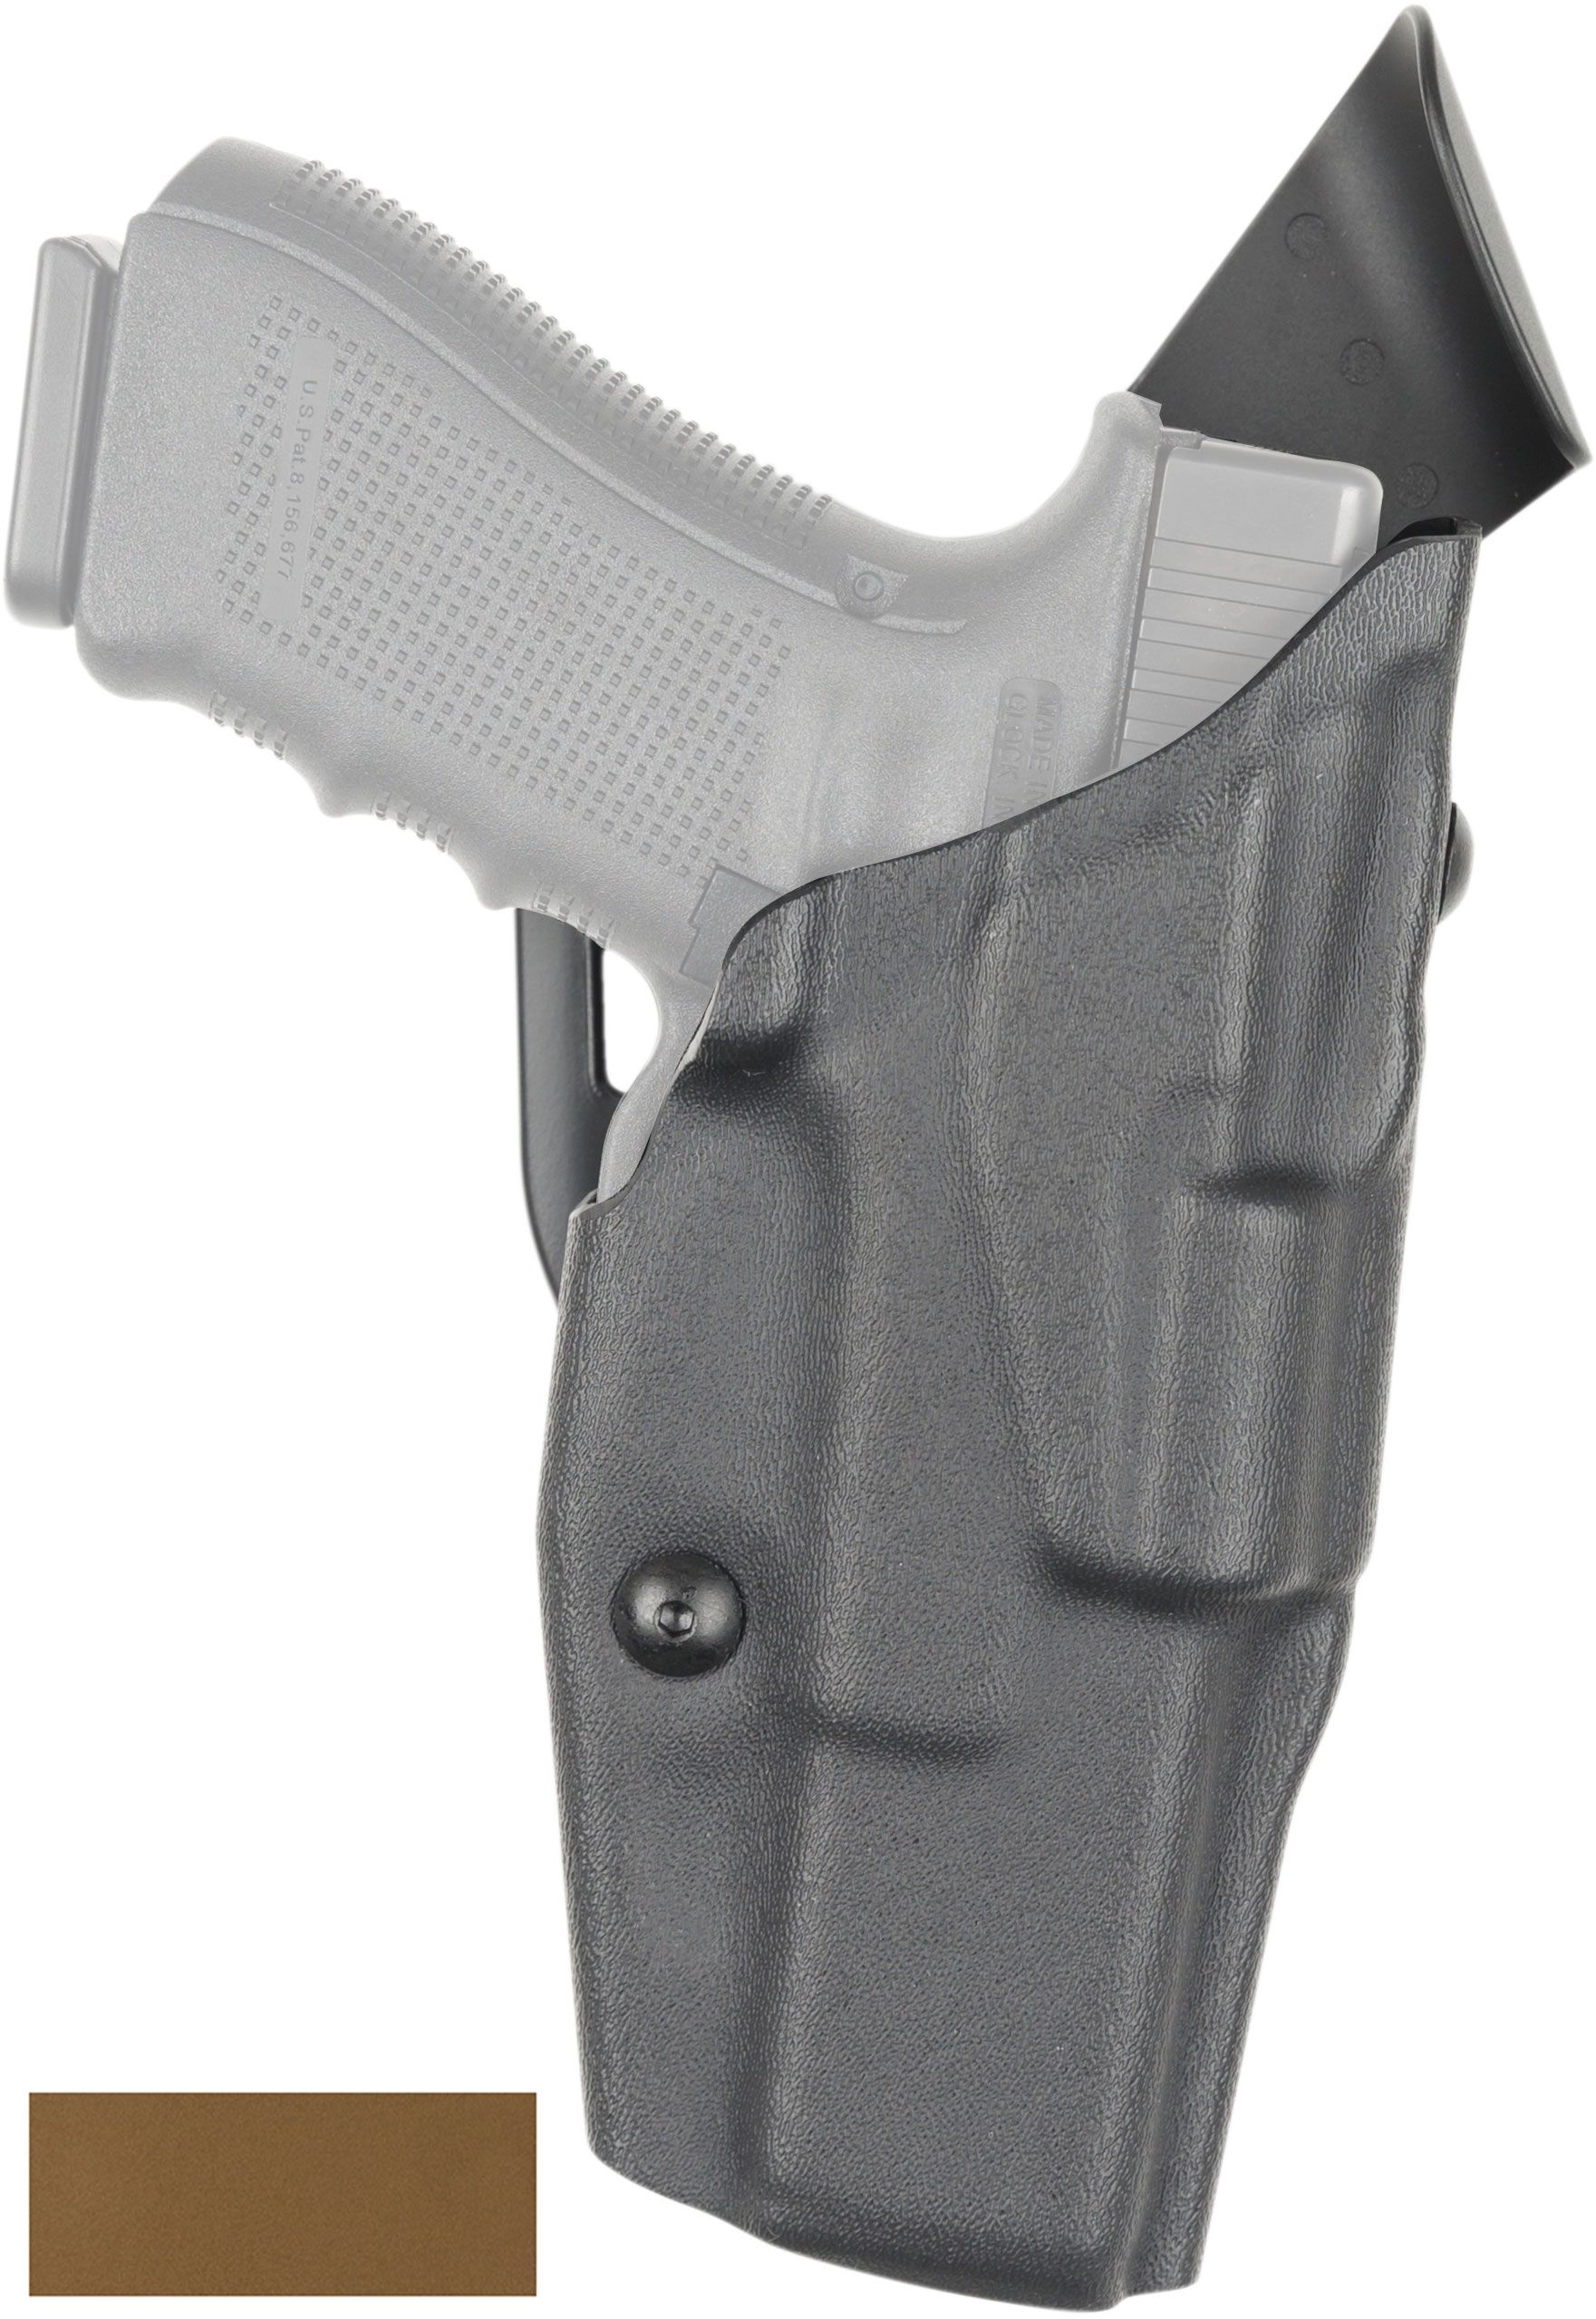 Safariland Model 6390 ALS Mid-Ride Level-I Duty Glock Holster : 6390-83-761